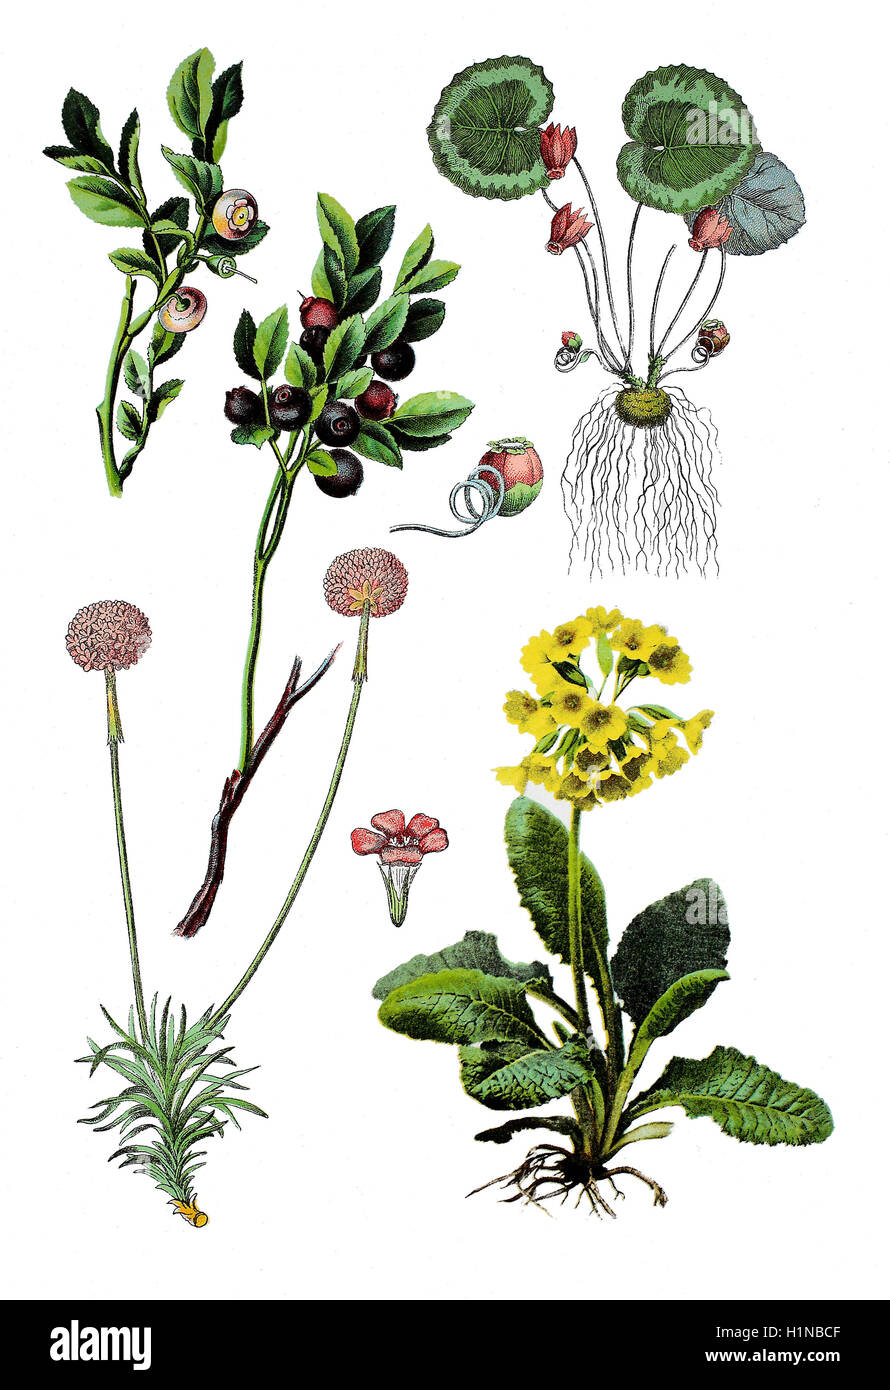 bilberry, Vaccinium myrtillus (top left), European or purple cyclamen, Cyclamen purpurascens, (top right), Lady's Cushion, Armeria (bottem left), common cowslip, Primula veris (bottem right) Stock Photo